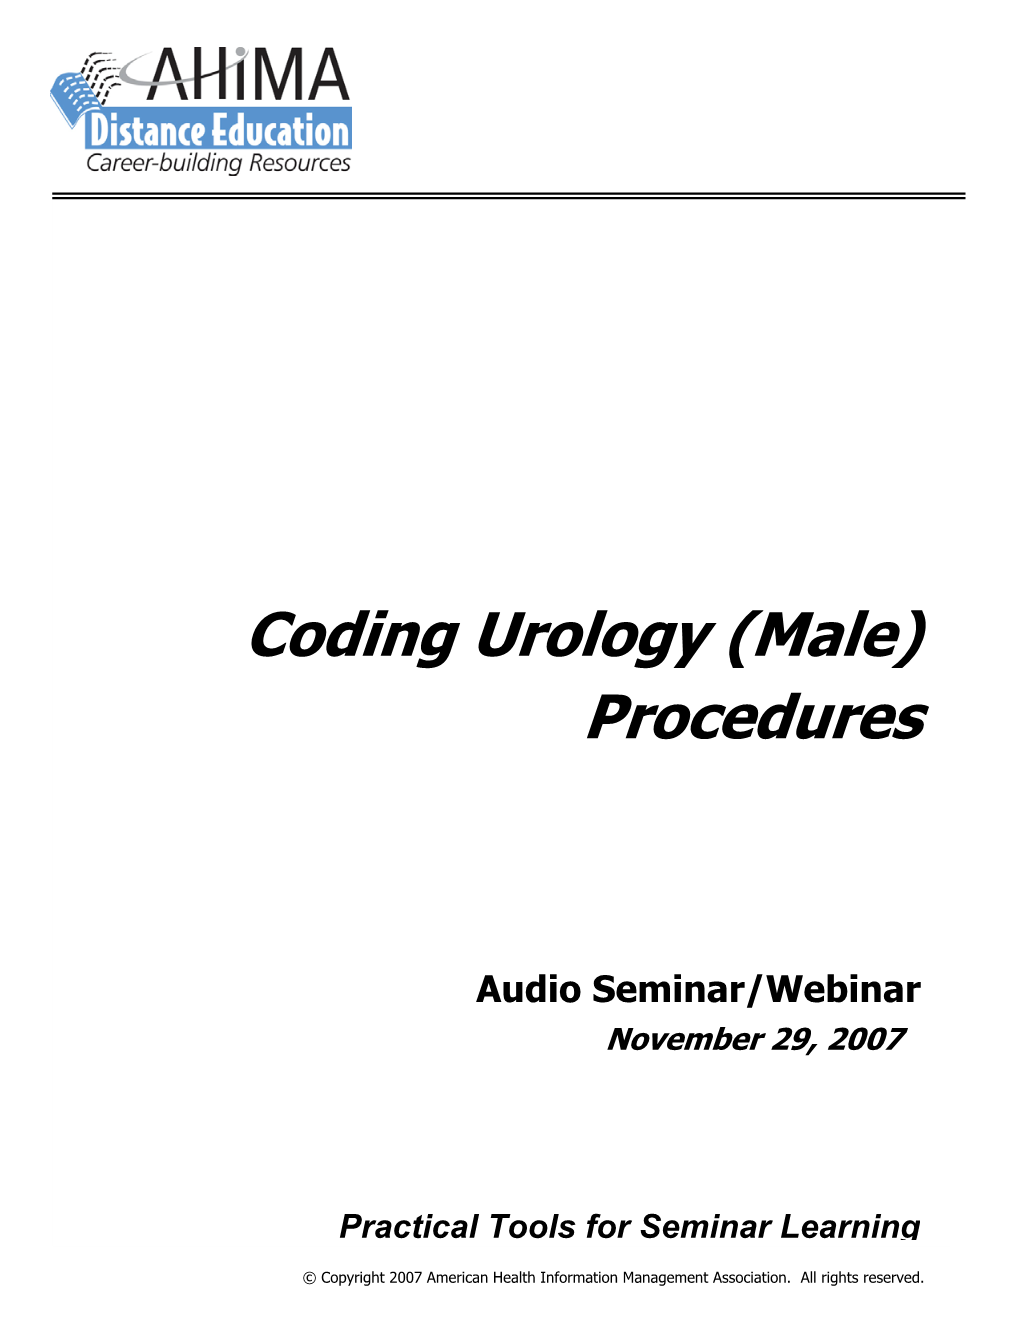 Coding Urology (Male) Procedures